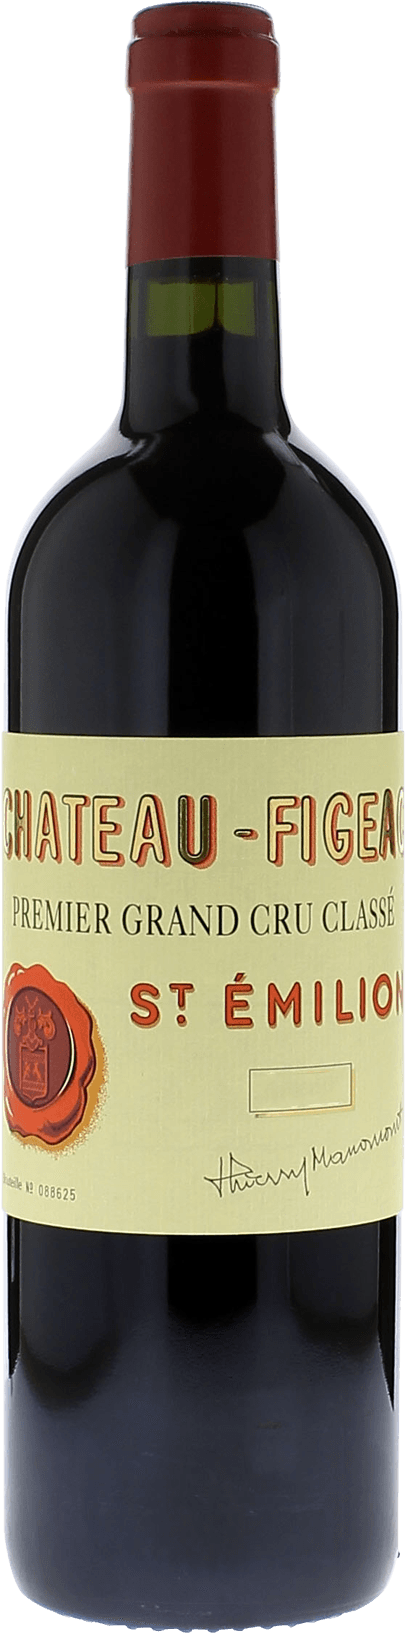 Figeac 1996 1er Grand cru B class Saint-Emilion, Bordeaux rouge